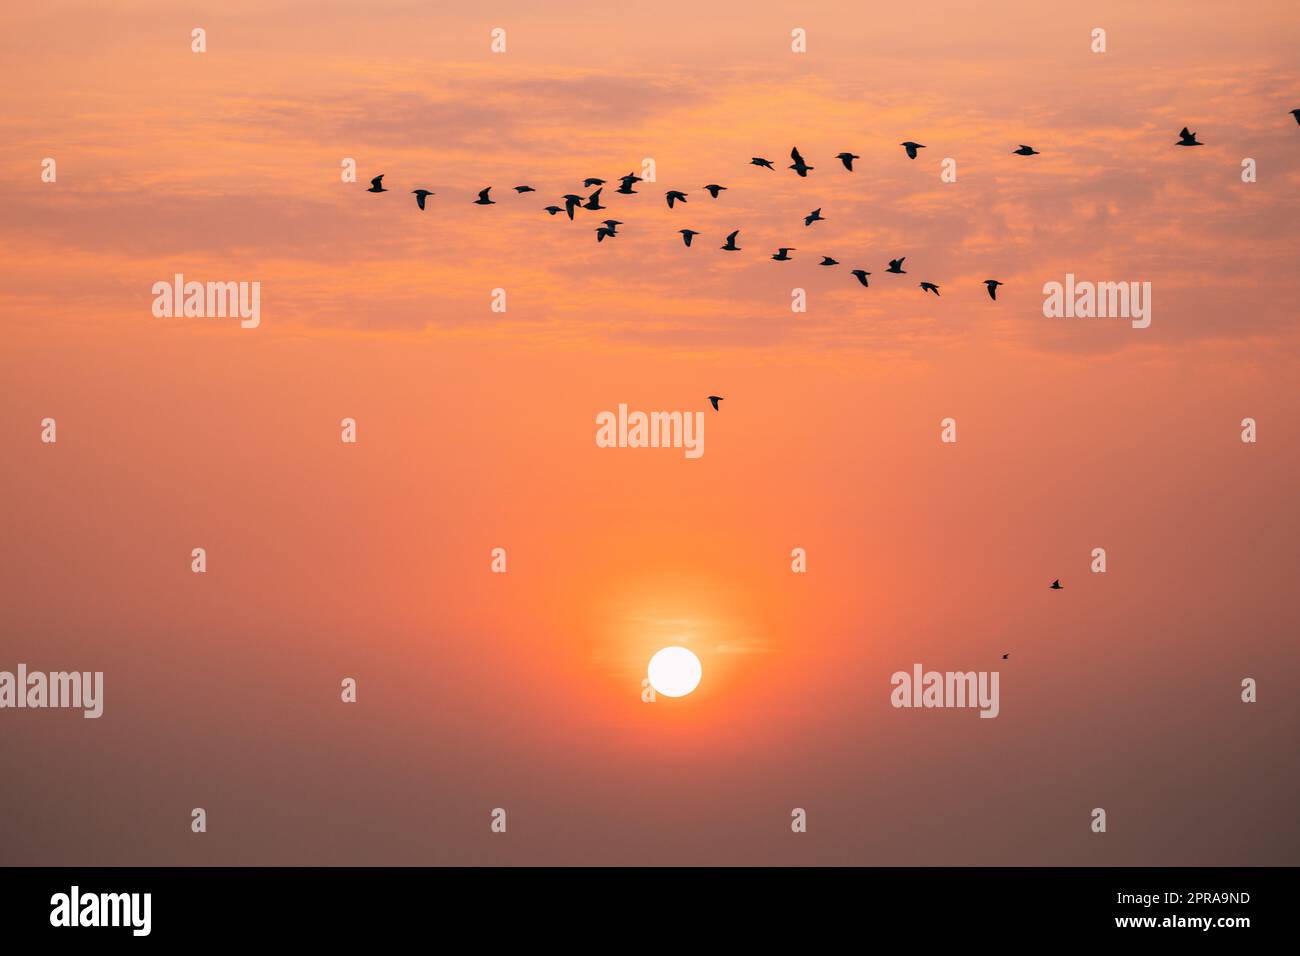 Flocks Of Wild Birds Flying In Sunset Sunrise Orange Sky. Sundown At Sunset. Natural Sunrise Sky In Warm Colors Stock Photo